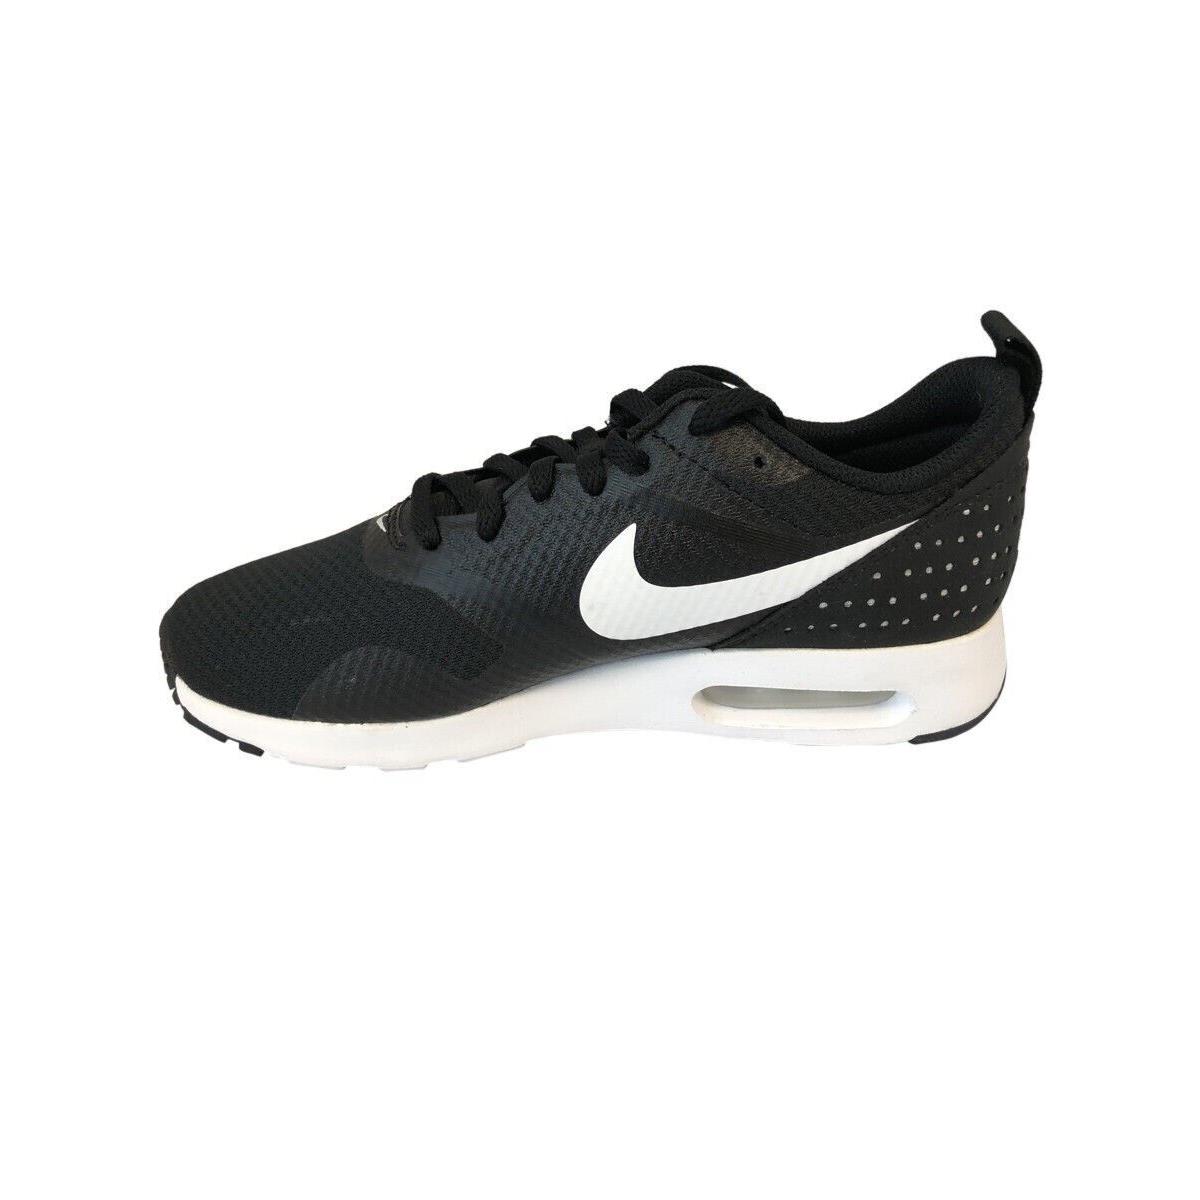 Nike Womens Air Max Tavas 916791-001 Black Running Shoes Sneakers Size 11 - Black